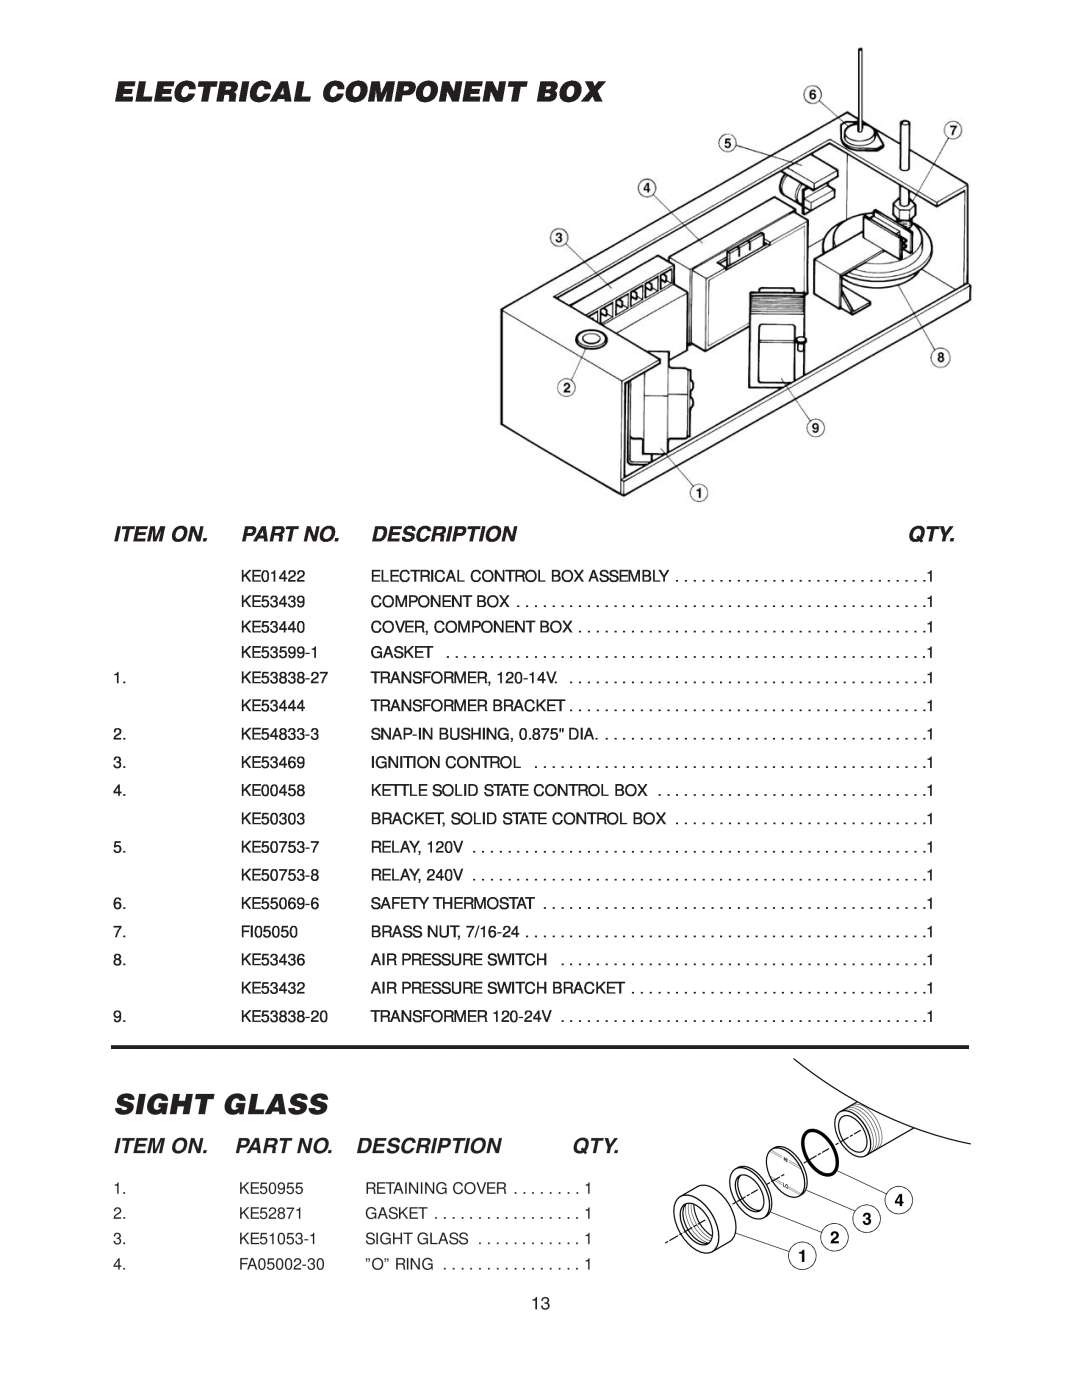 Cleveland Range KGL-80-T, KGL-40-SH, KGL-100, KGL-40-T manual Electrical Component Box, Sight Glass, Item On, Description 